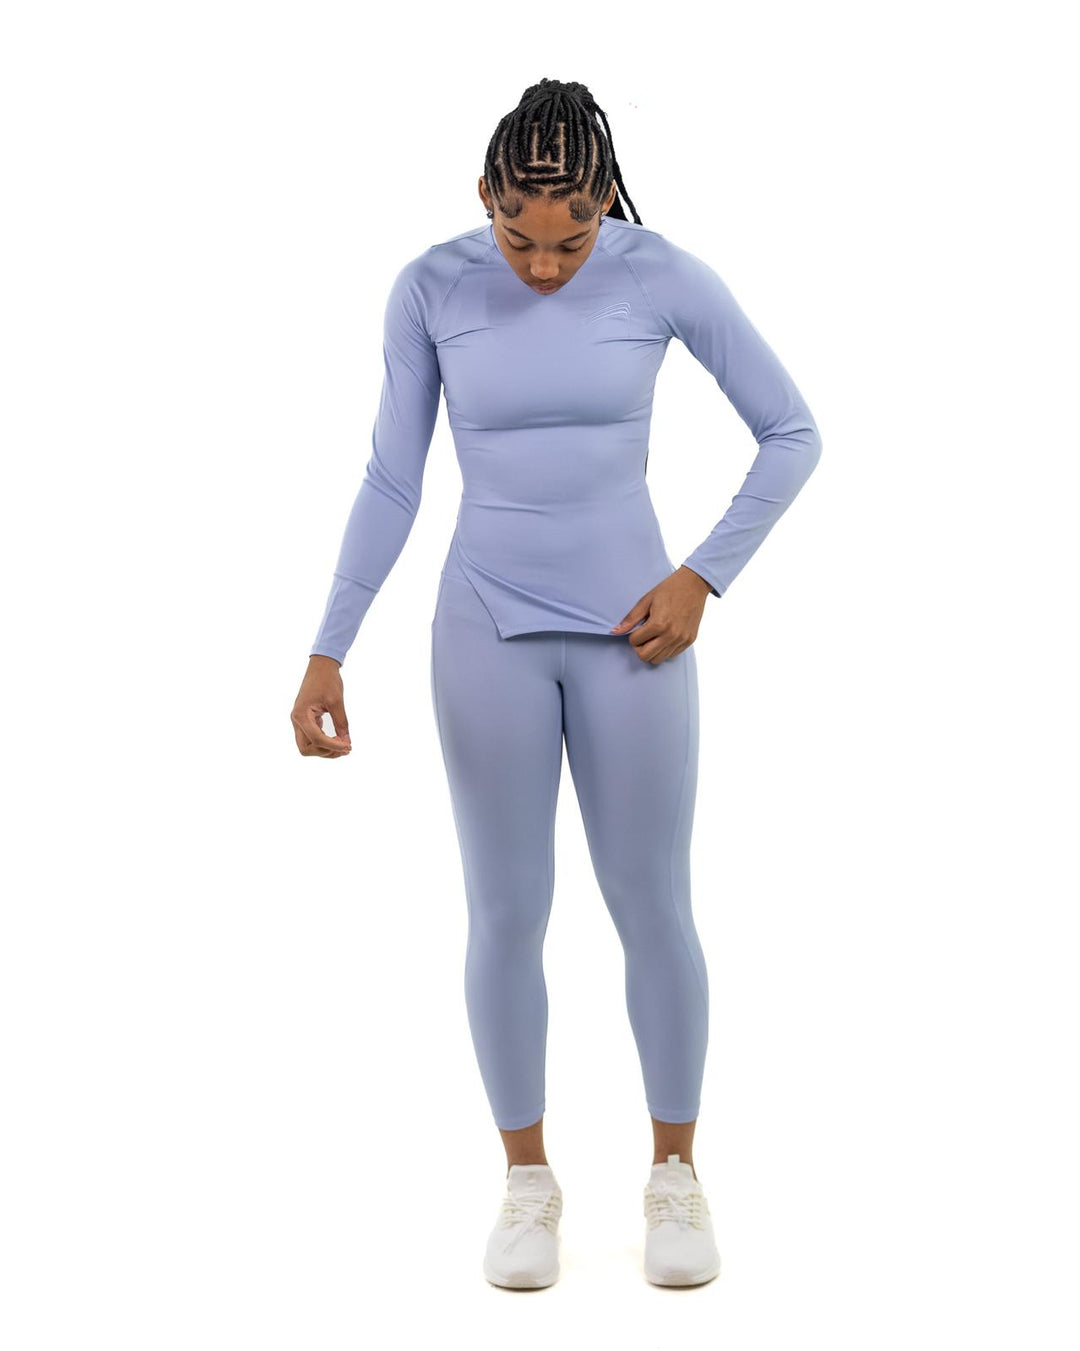 Women’s Fitted Runner Shirt - Light Blue Gray